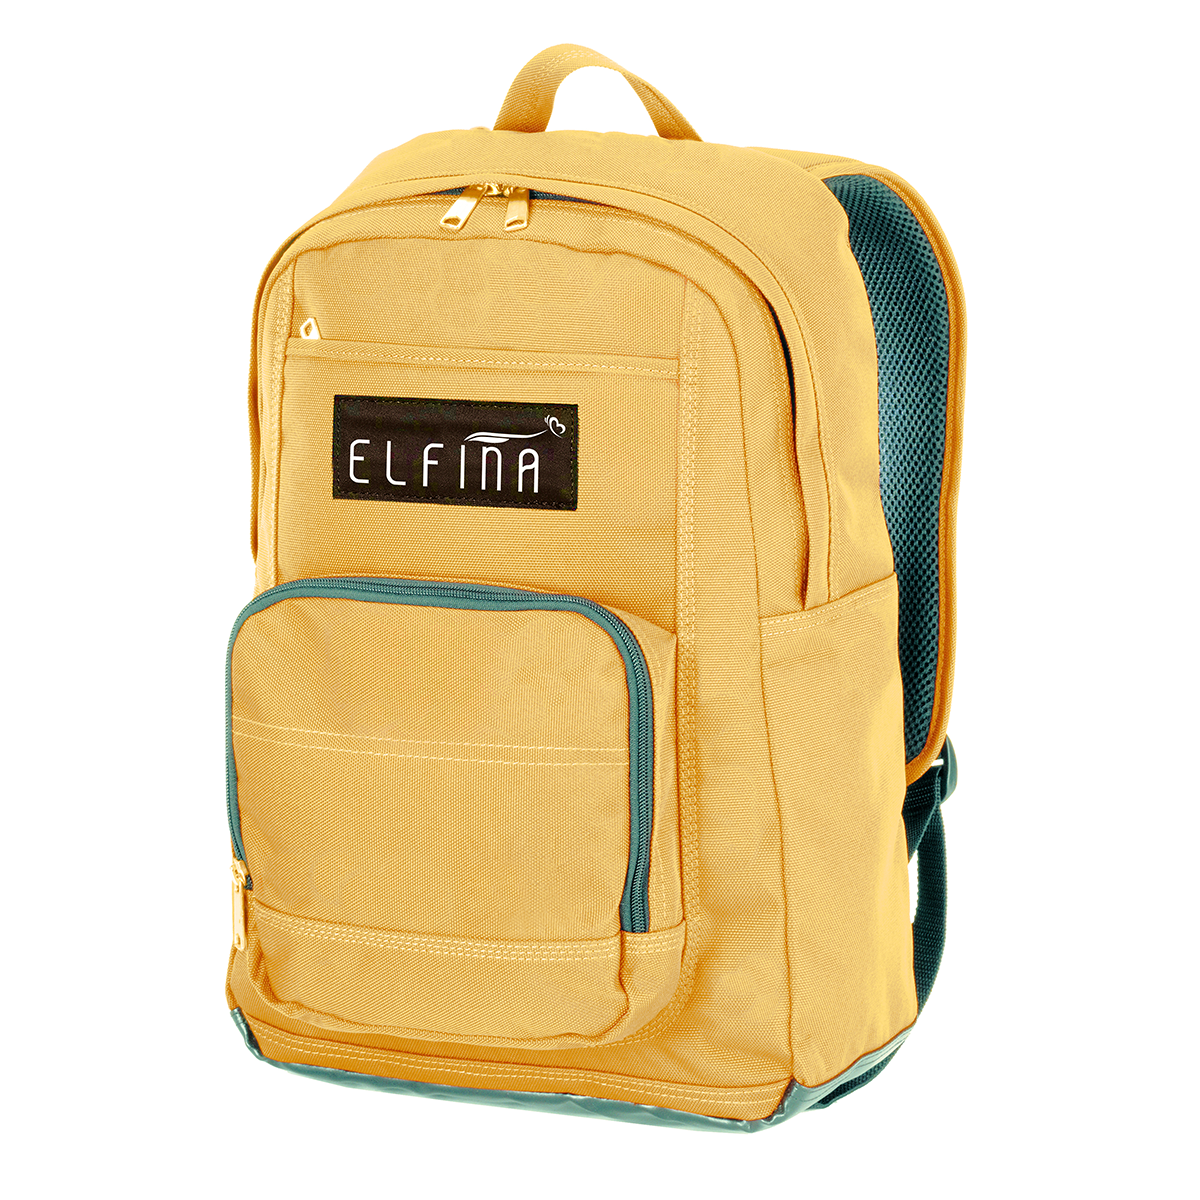 ELFINA Youth Backpack Hiking Backpack Outdoor Sport Backpack ,School Bag, Travel Bag